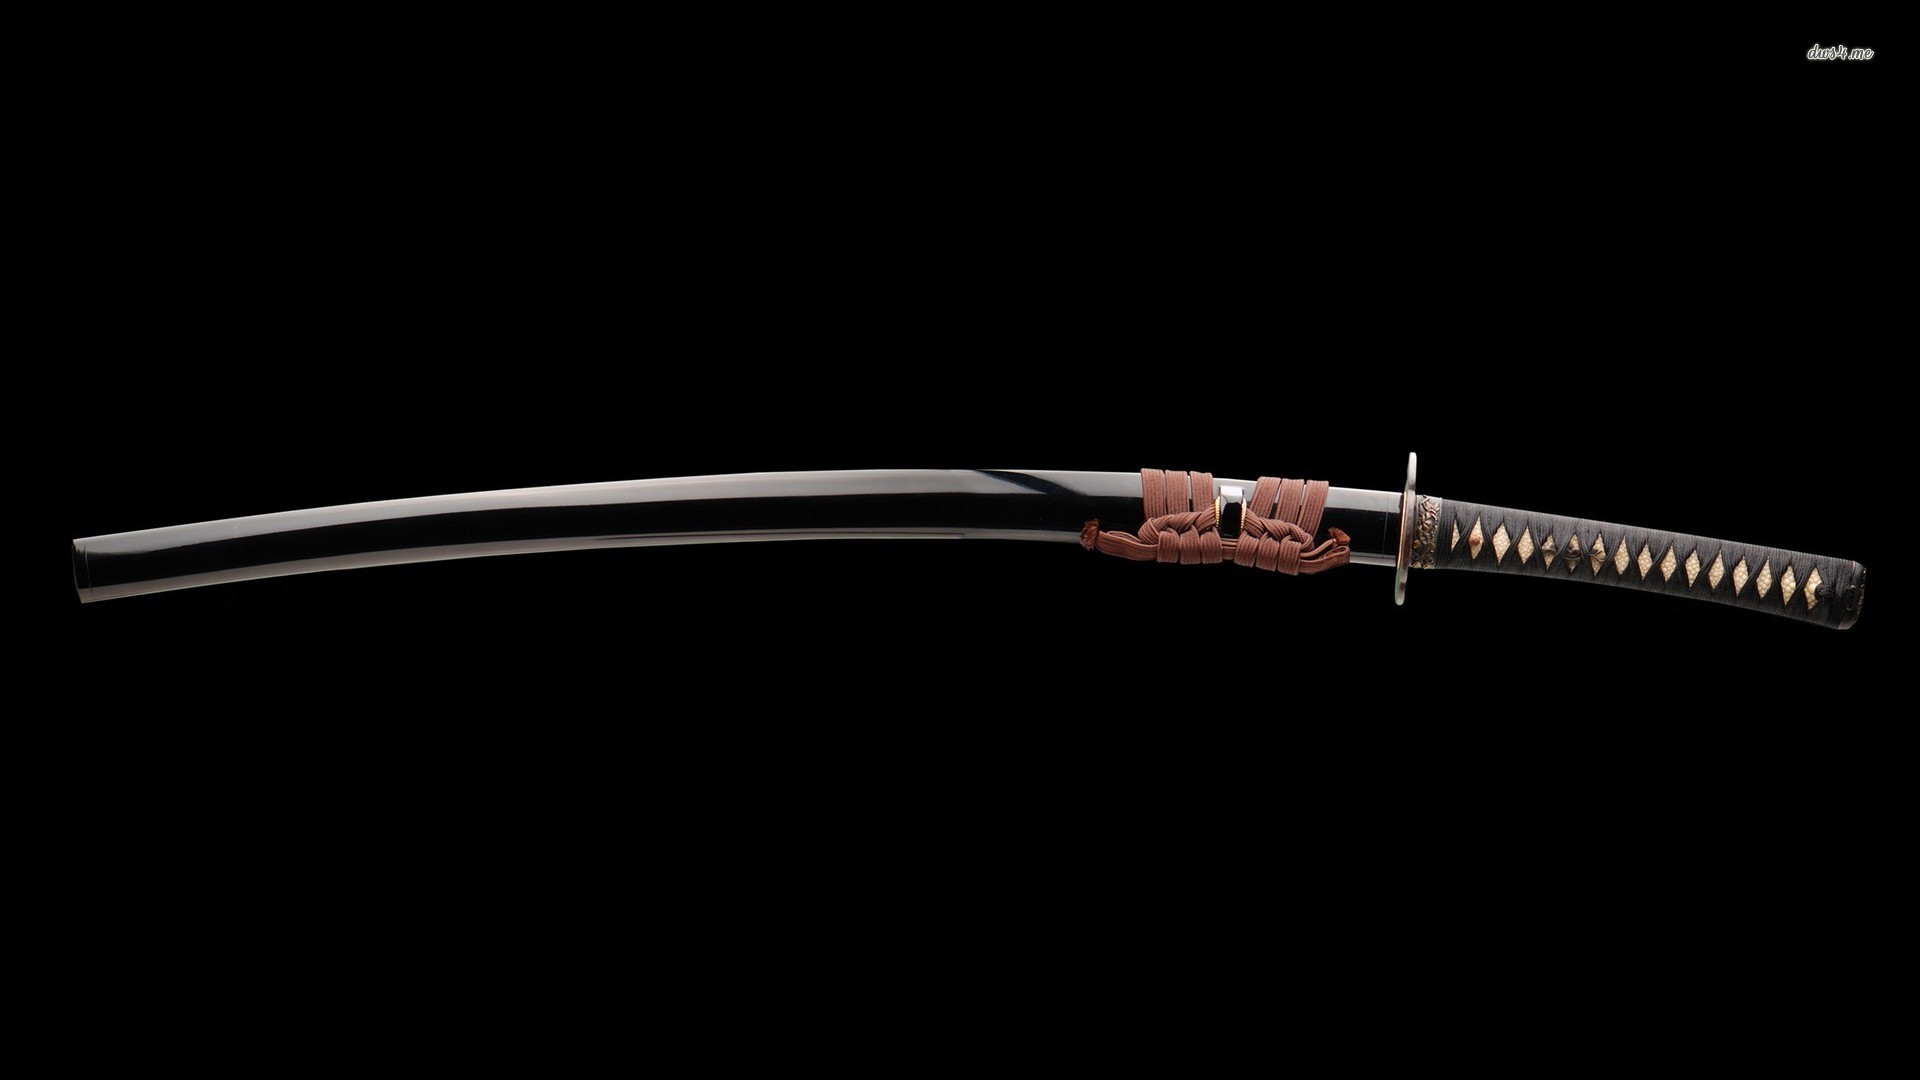 1920x1080 Samurai sword wallpaper - 817831